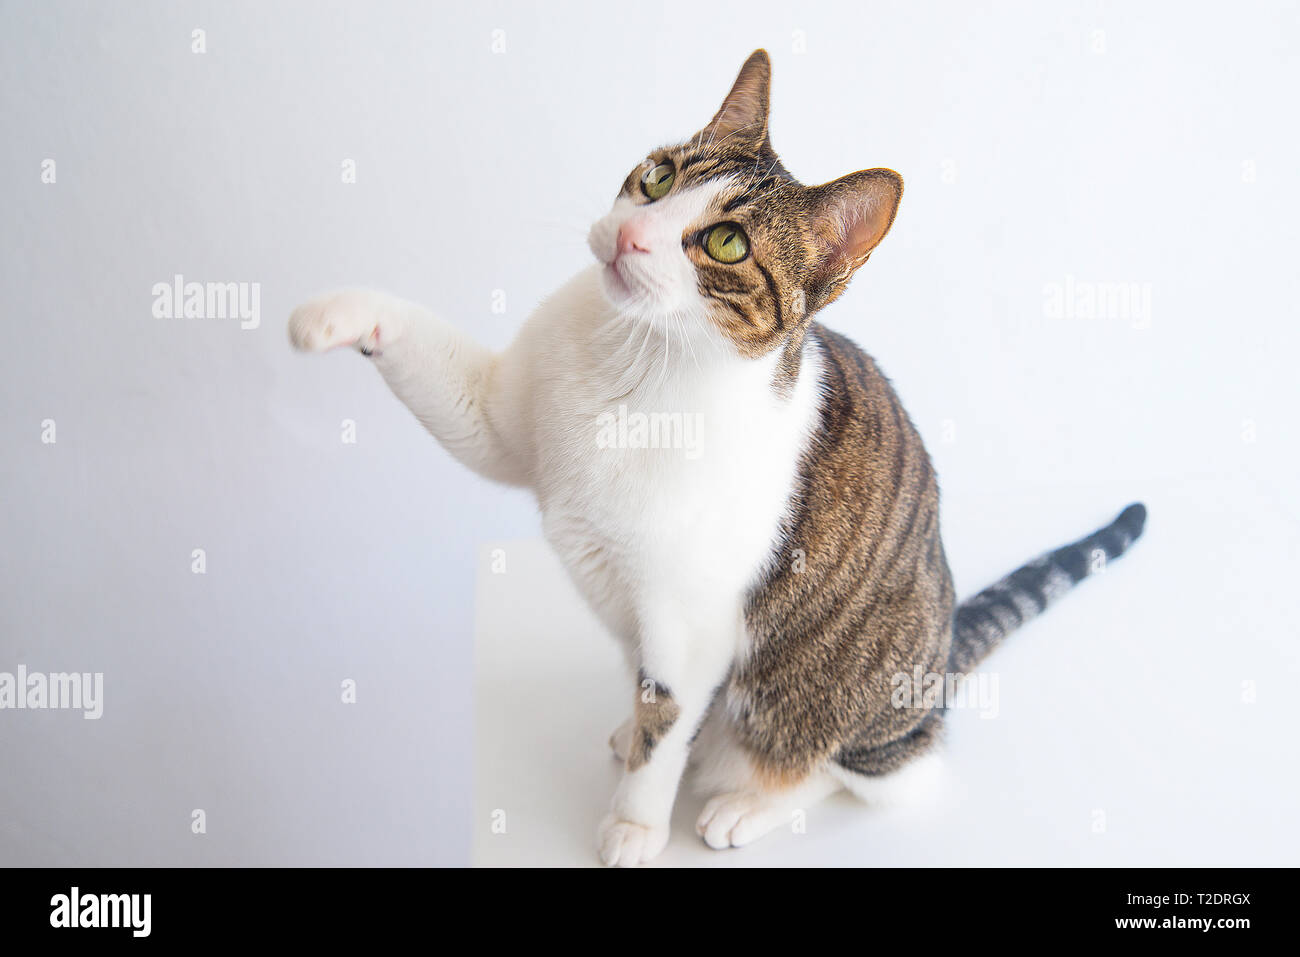 Tabby and white cat rising his foreleg. Stock Photo